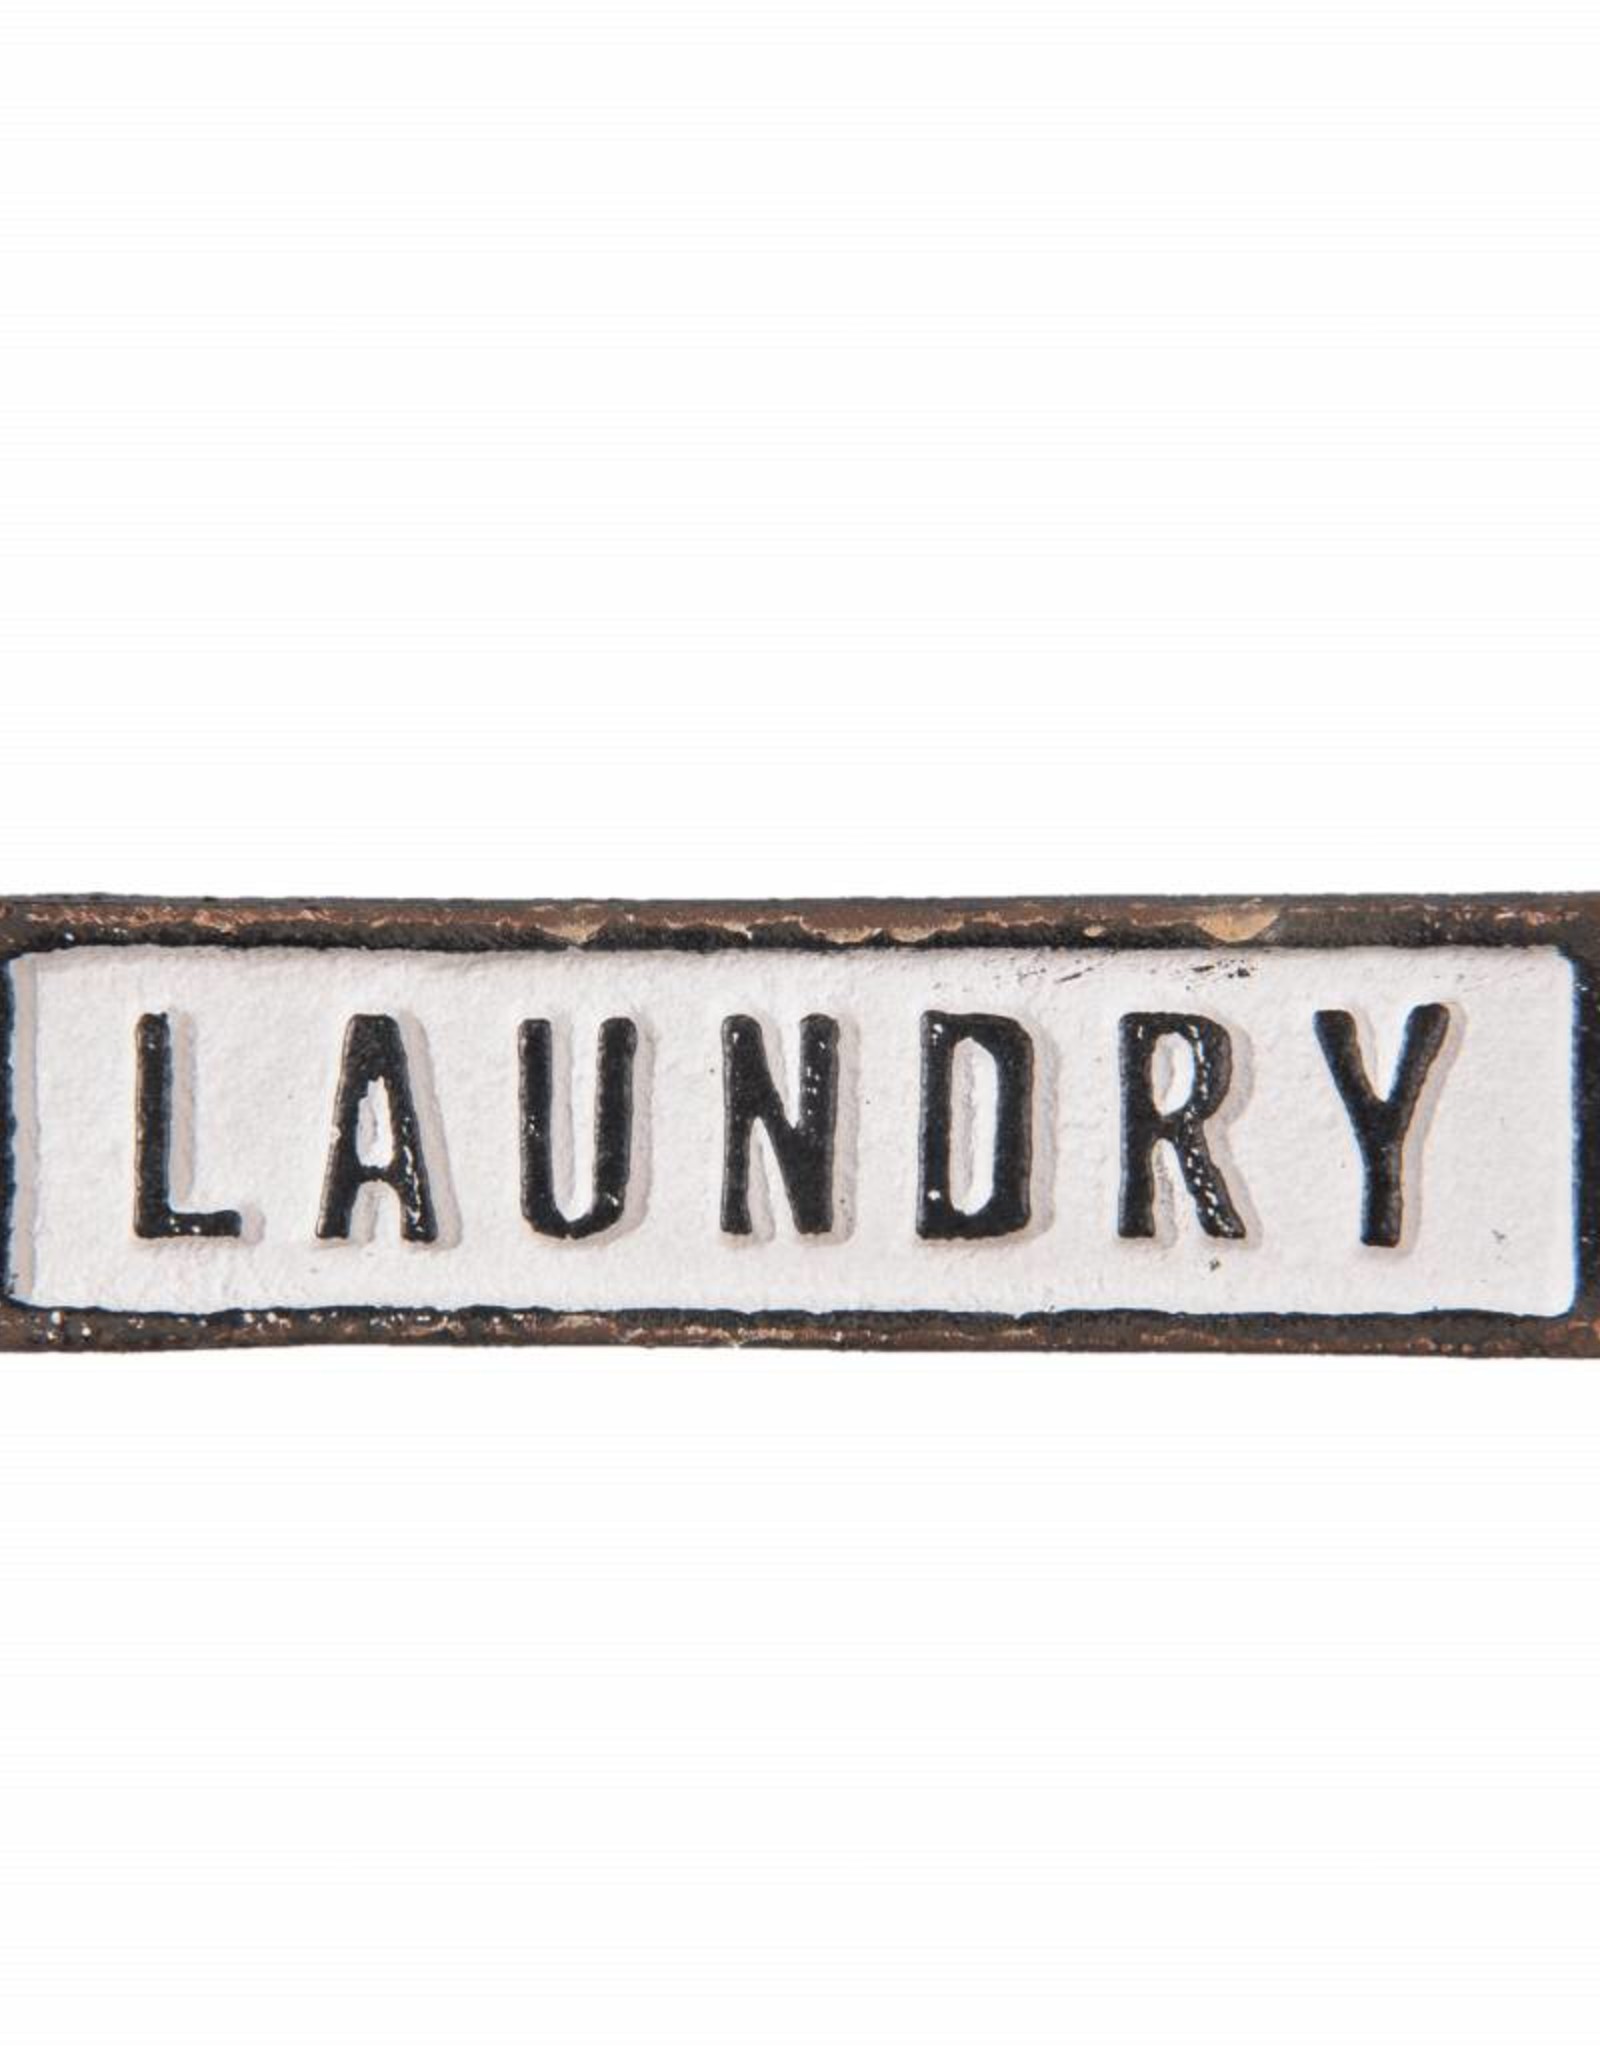 Clayre en Eef deurplaatje “Laundry”